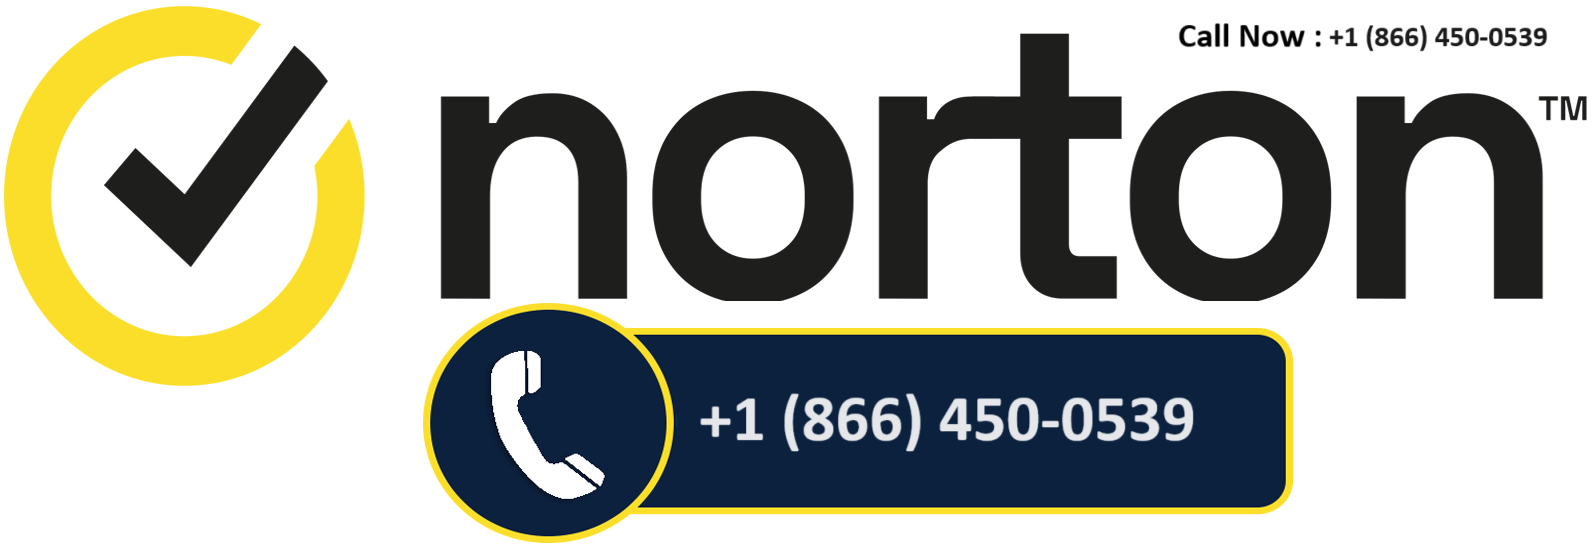 Norton-security-banner